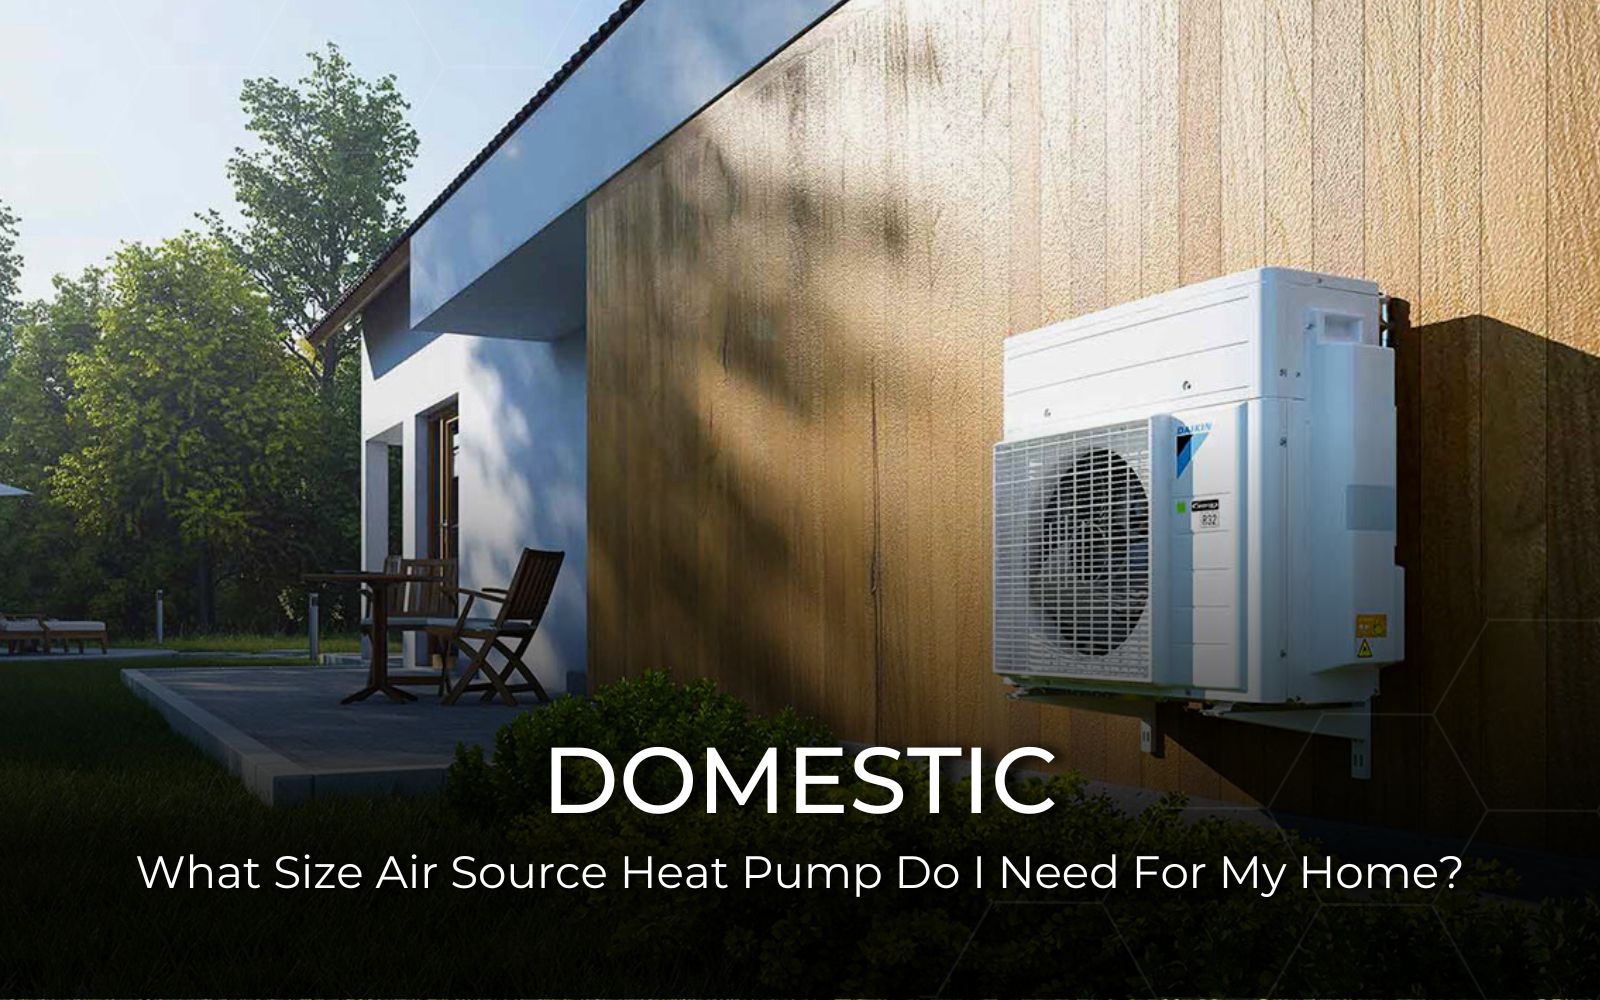 Air Source Heat Pump Size